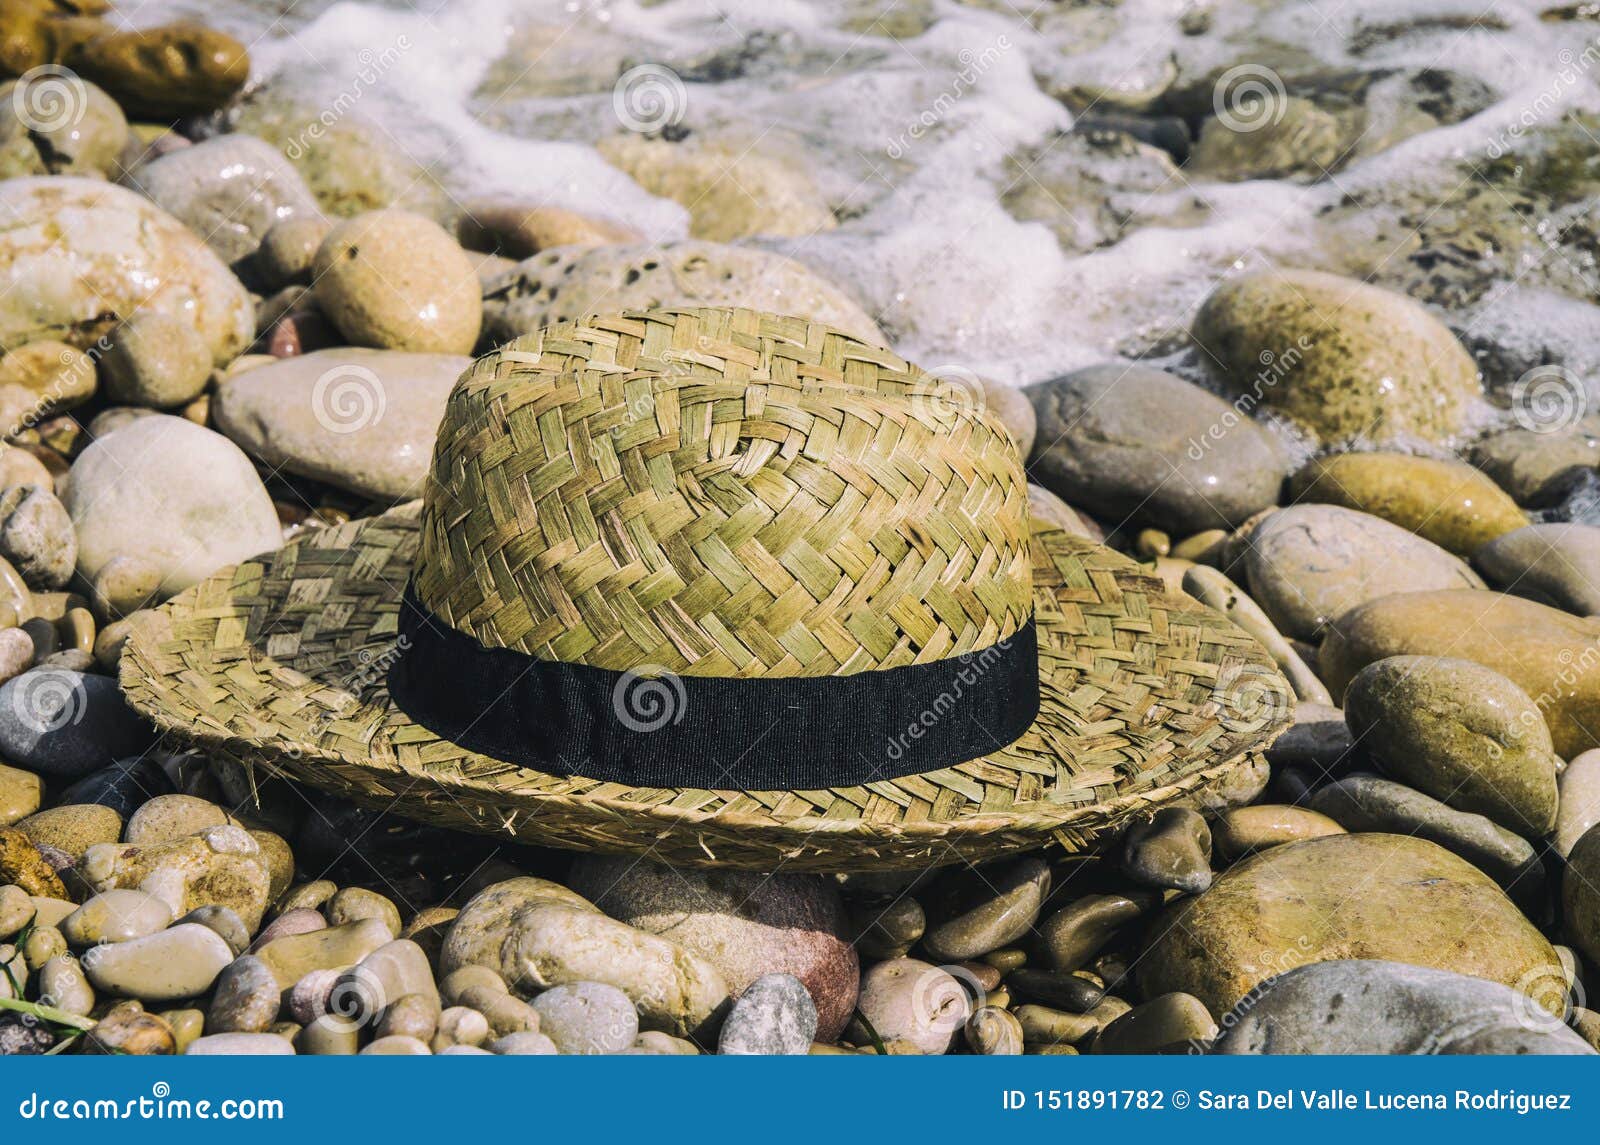 straw hat lying on top of beach stones